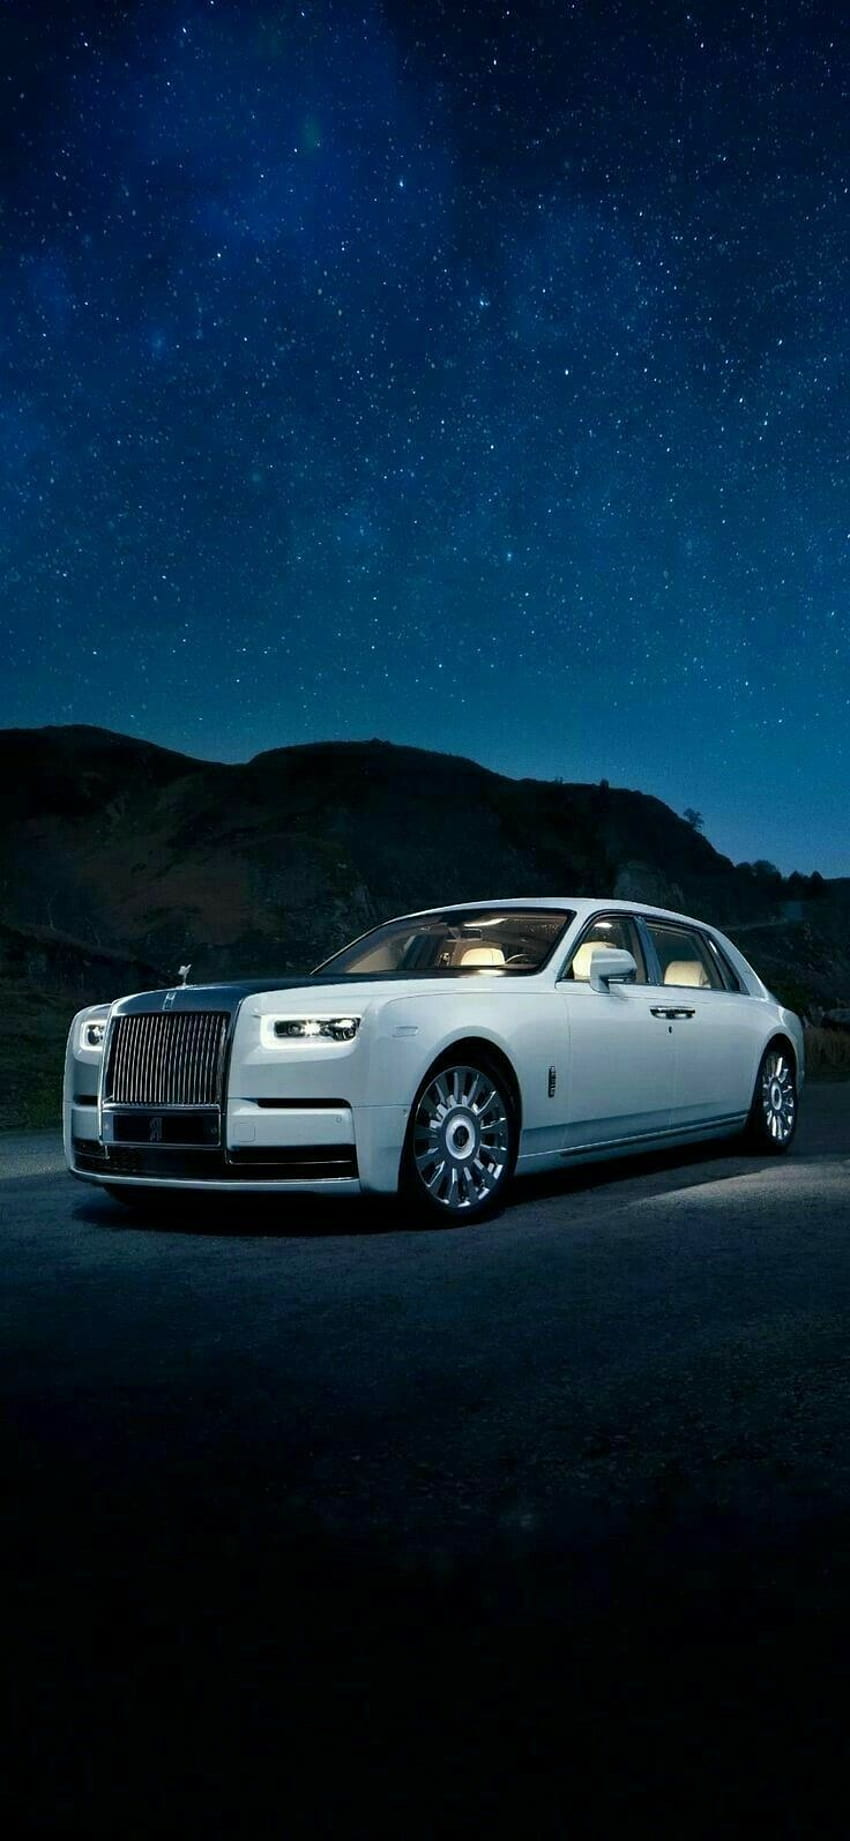 Rolls Royce Phantom Dark iPhone Wallpaper  Luxury cars rolls royce Rolls  royce phantom Rolls royce wallpaper